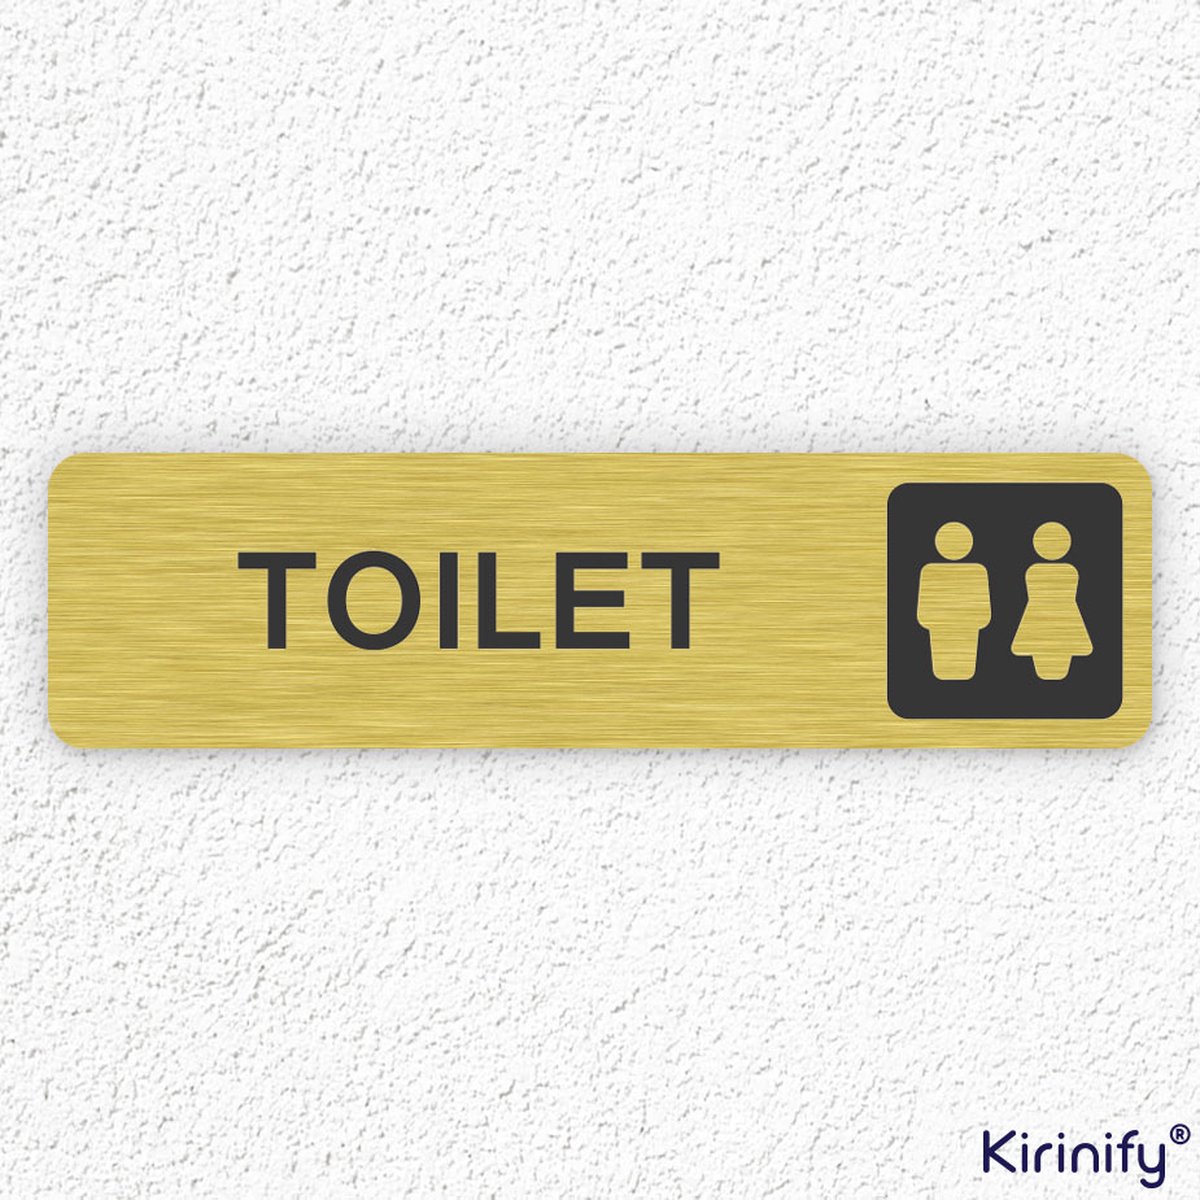 Kirinify - WC Bordje 15 x 4 cm - Toilet man vrouw - Zelfklevend goud toilet bordje - Gegraveerd